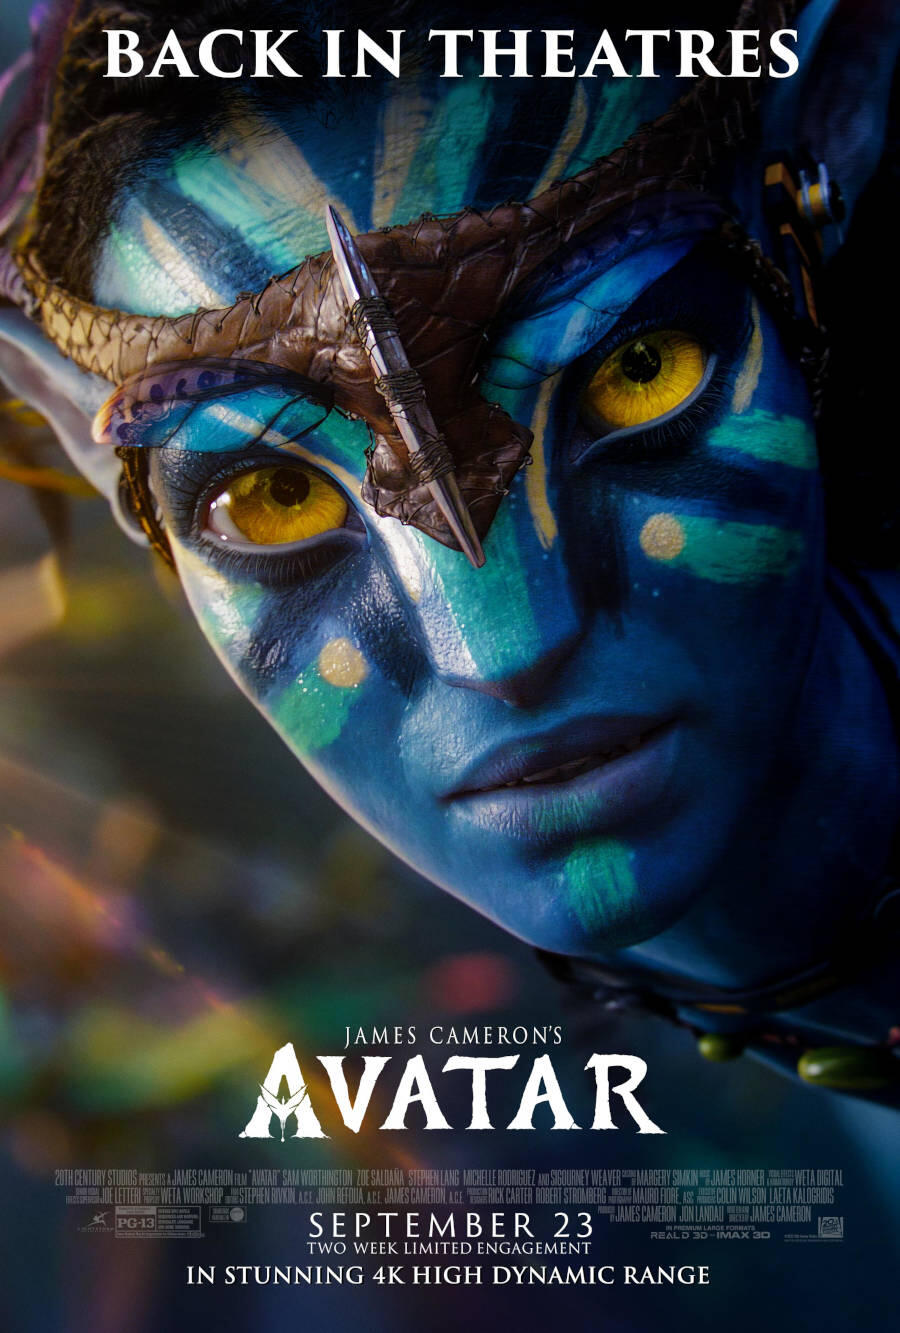 Avatar 2 The Way of Water Release Date on Disney Plus OTT